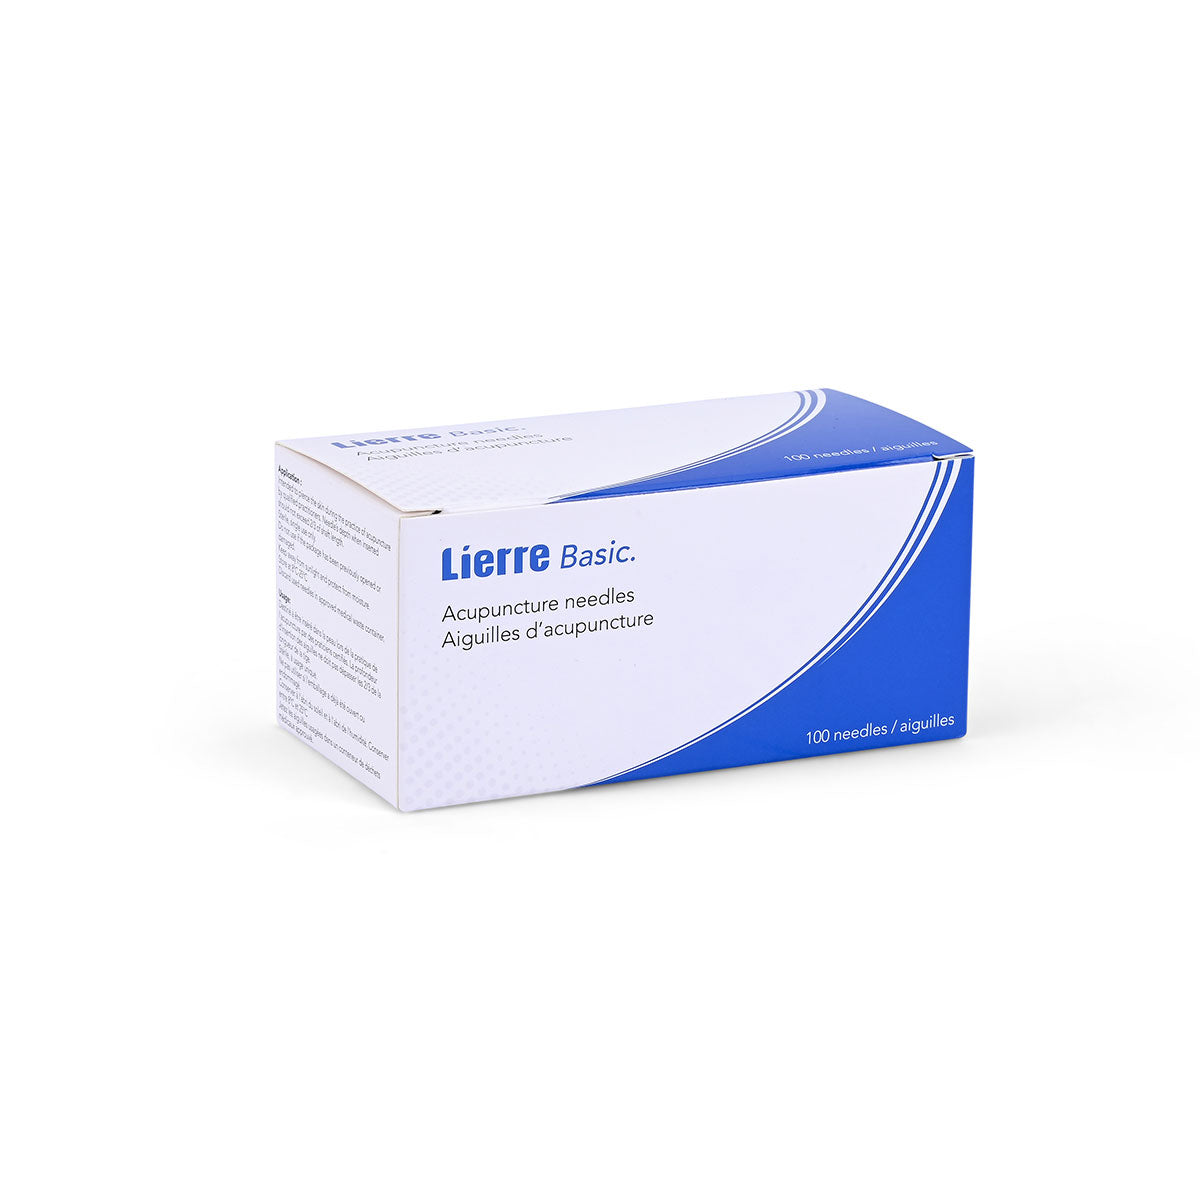 Lierre Basic Acupuncture Needles 100pcs/box